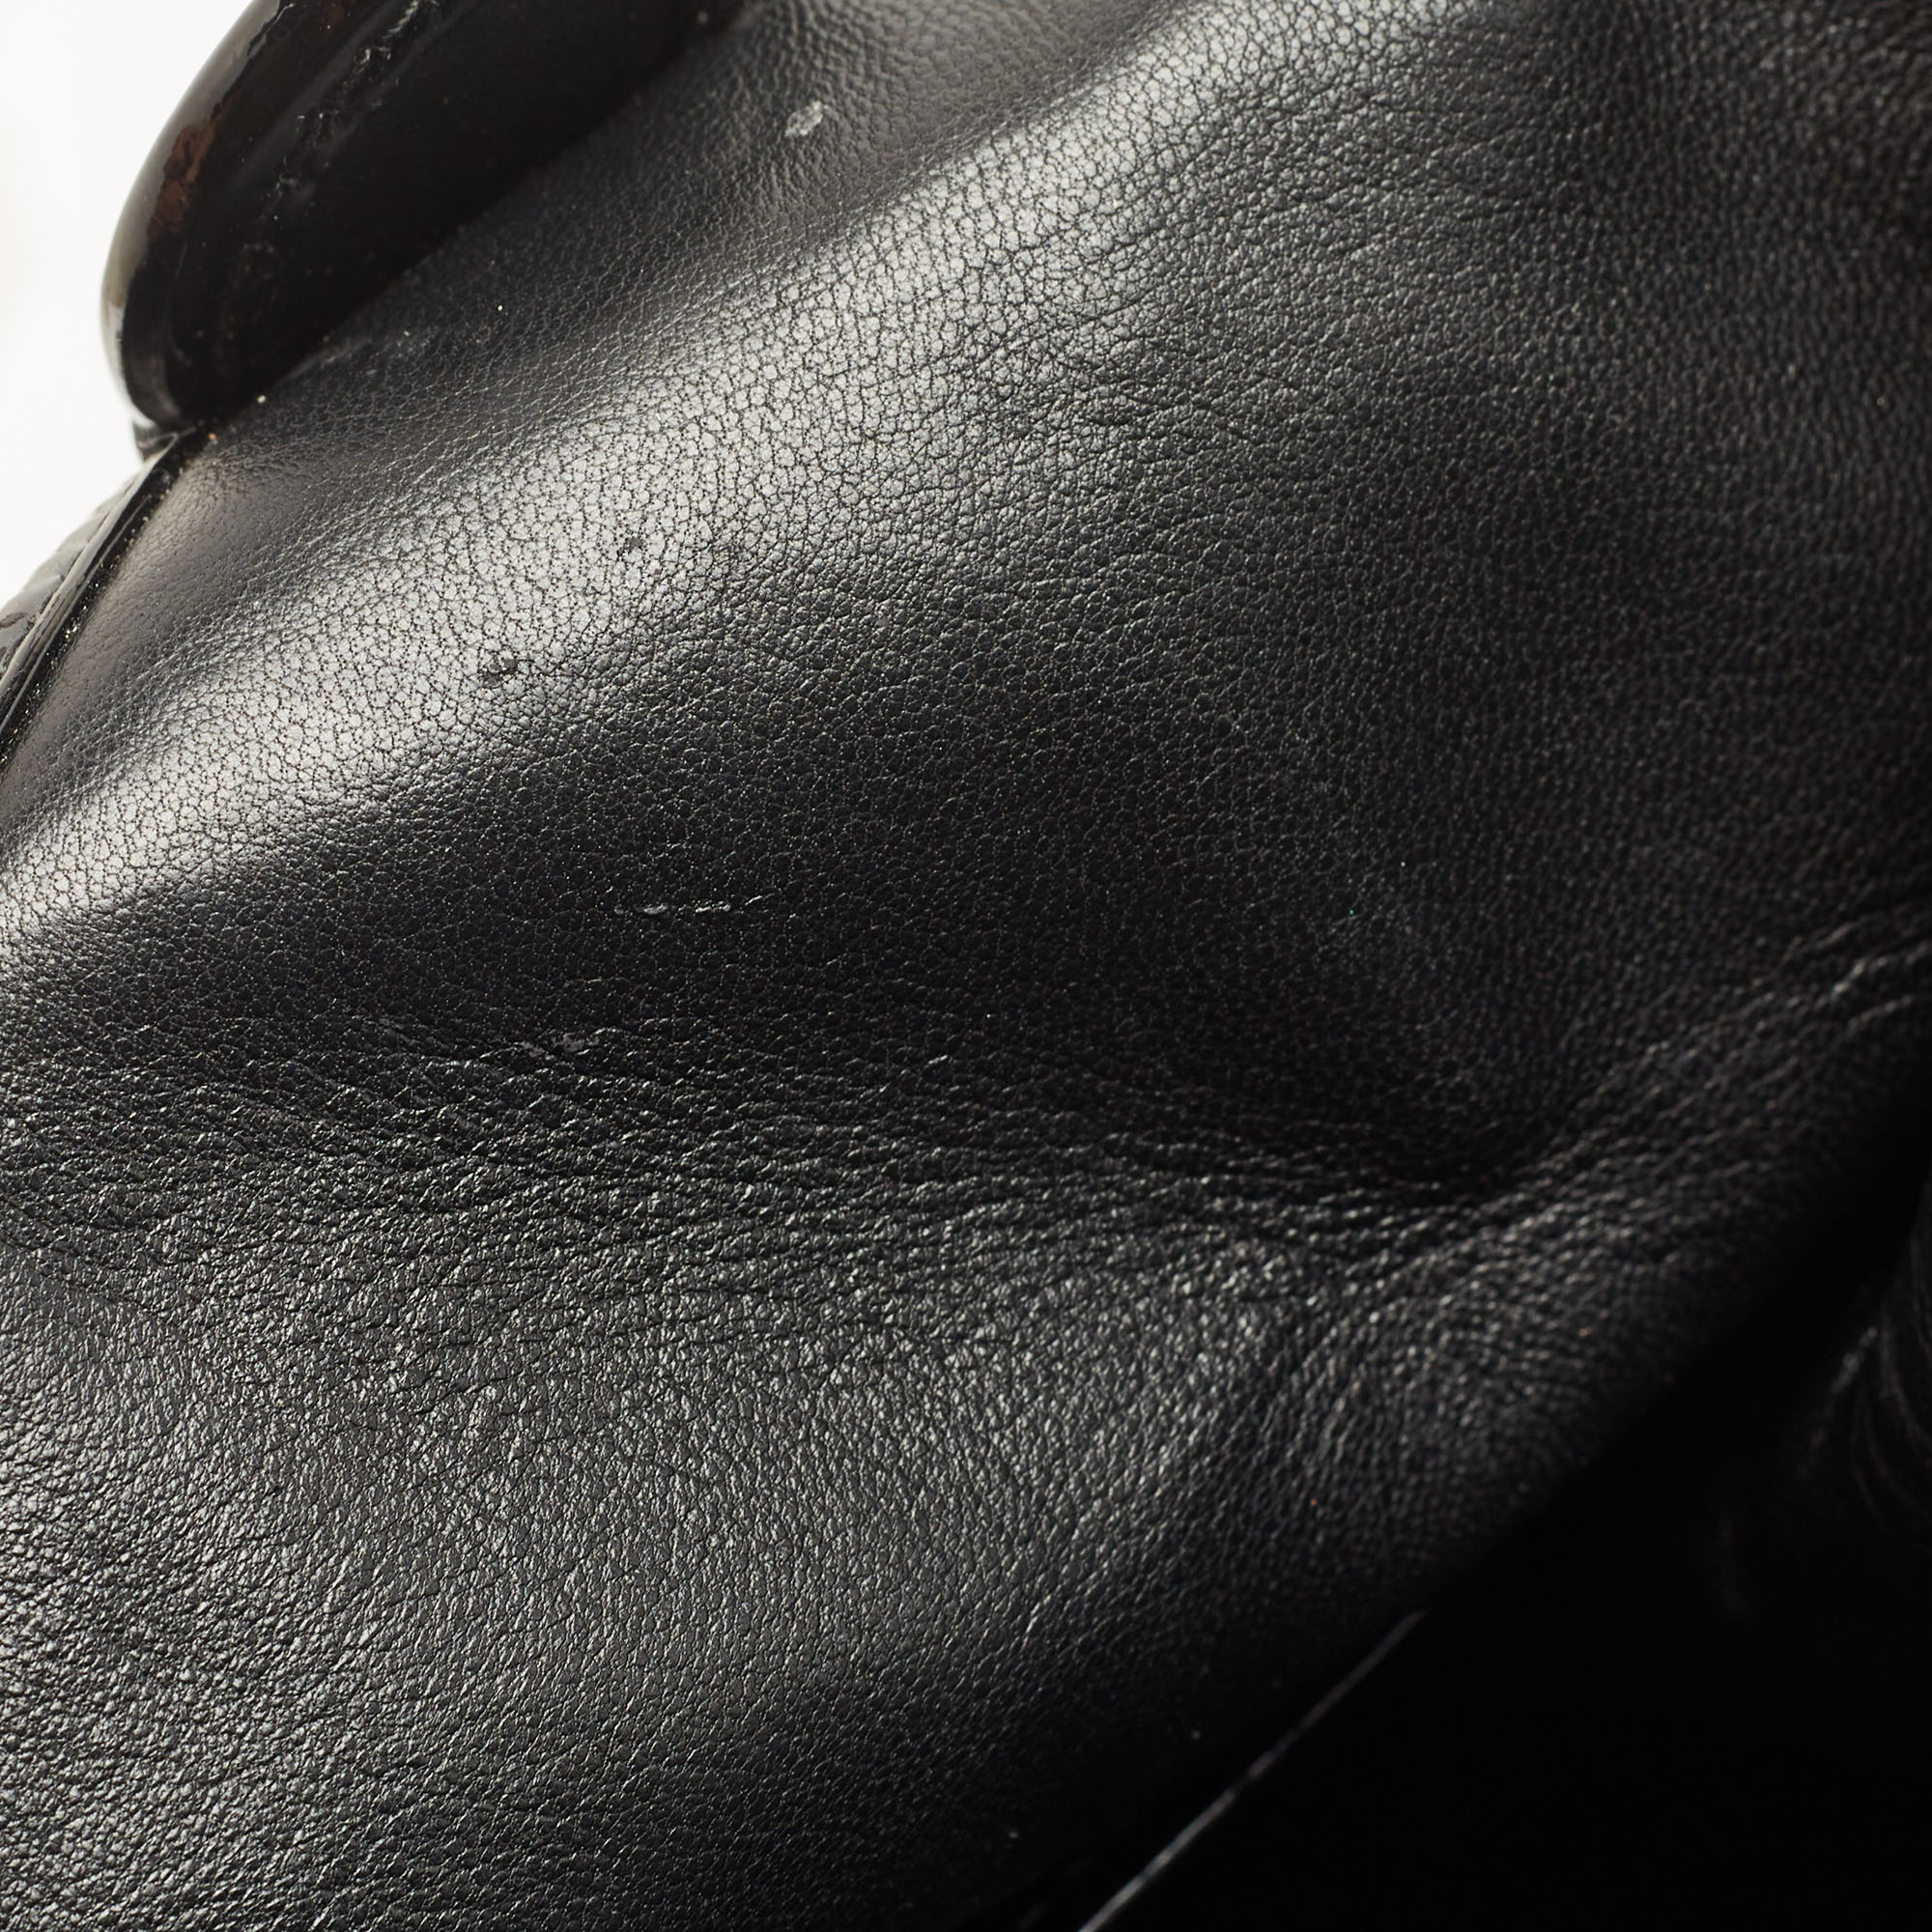 Dior Black Croc Embossed Patent Leather 61 Hobo